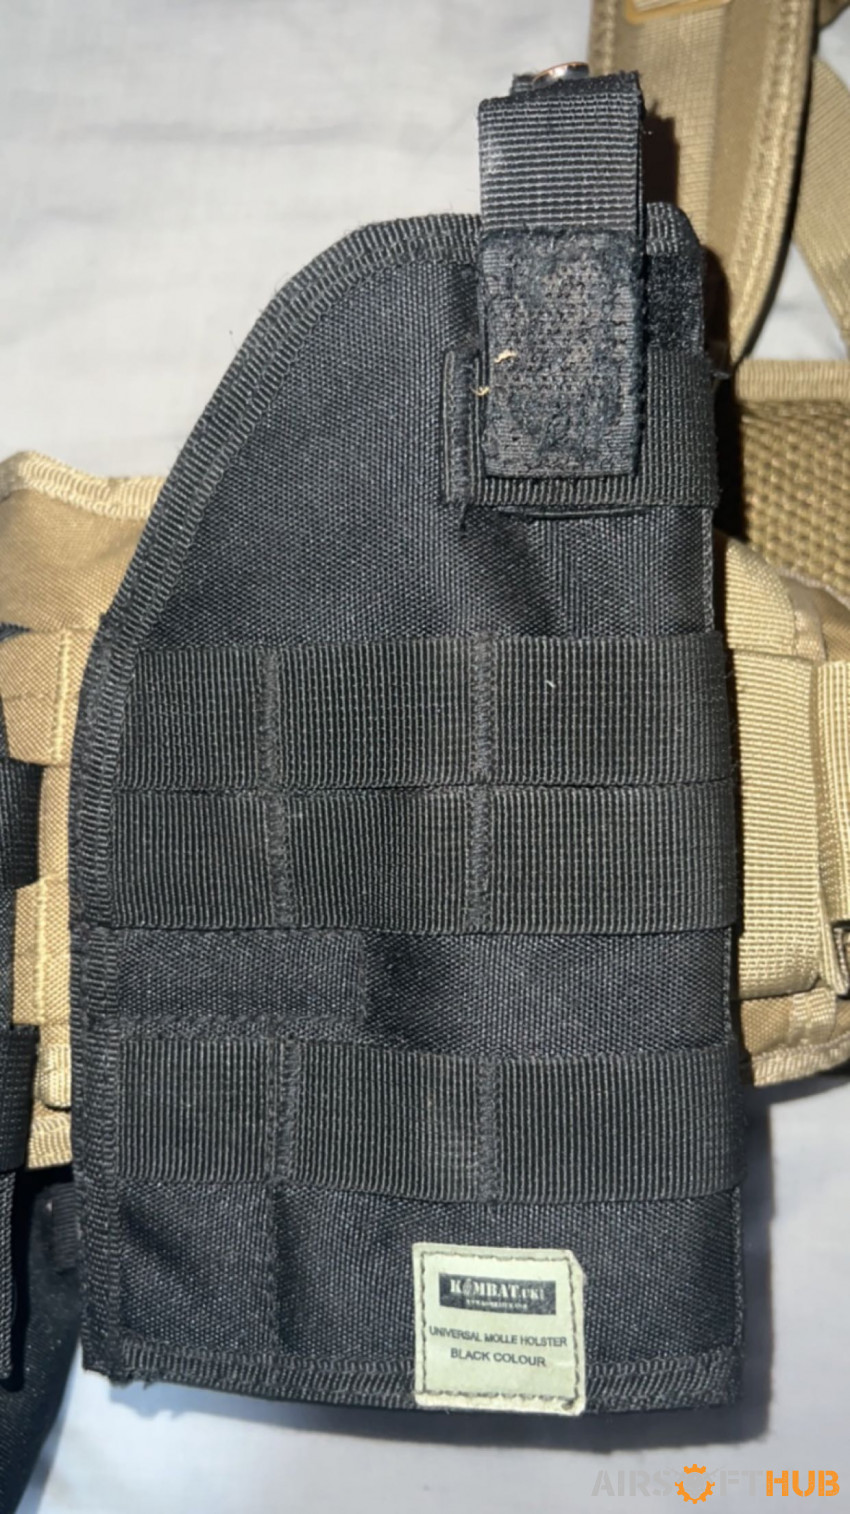 viper tactical battle belt - Used airsoft equipment